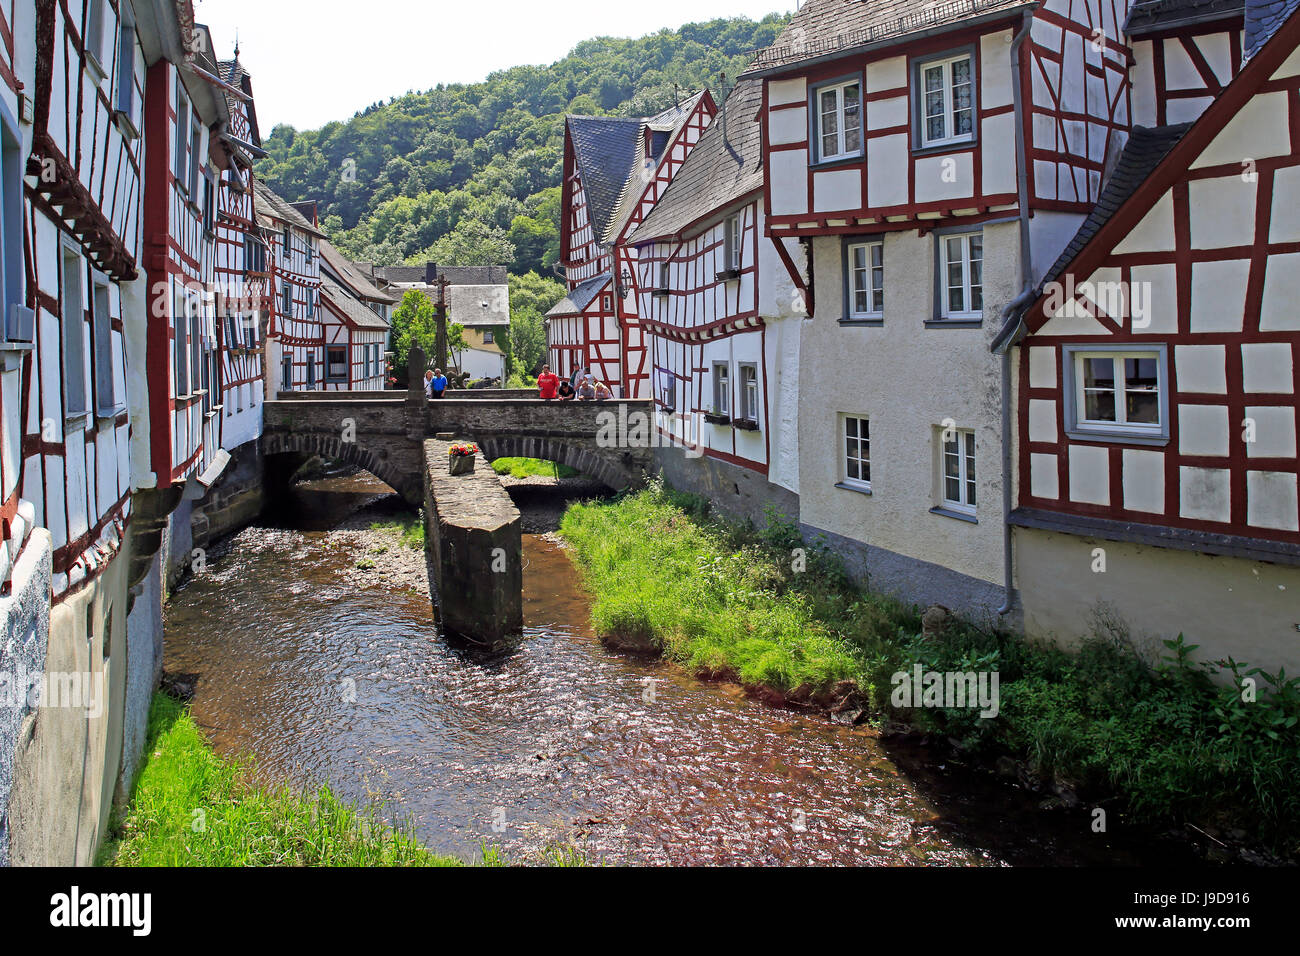 Half-timbered Houses in Monreal on River Elz, Eifel, Rhineland-Palatinate, Germany, Europe Stock Photo